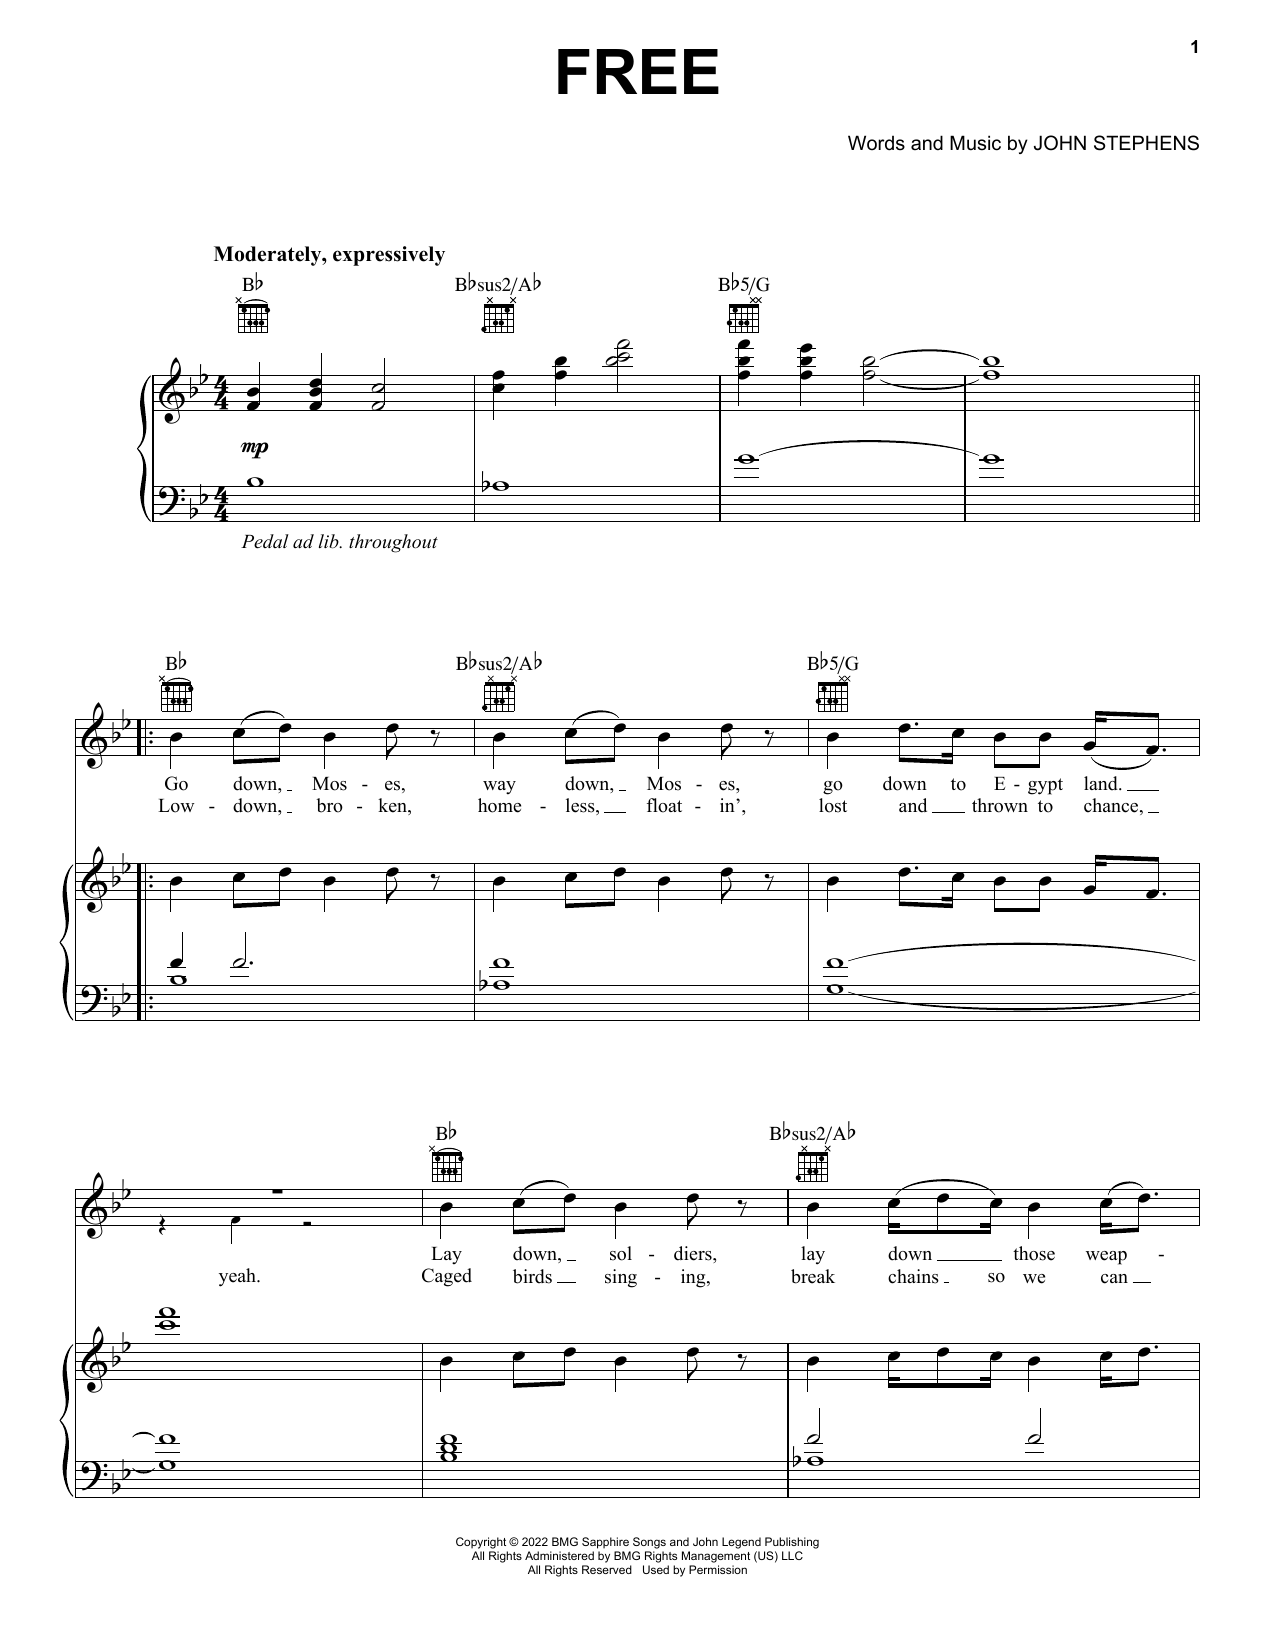 John Legend FREE sheet music notes and chords. Download Printable PDF.